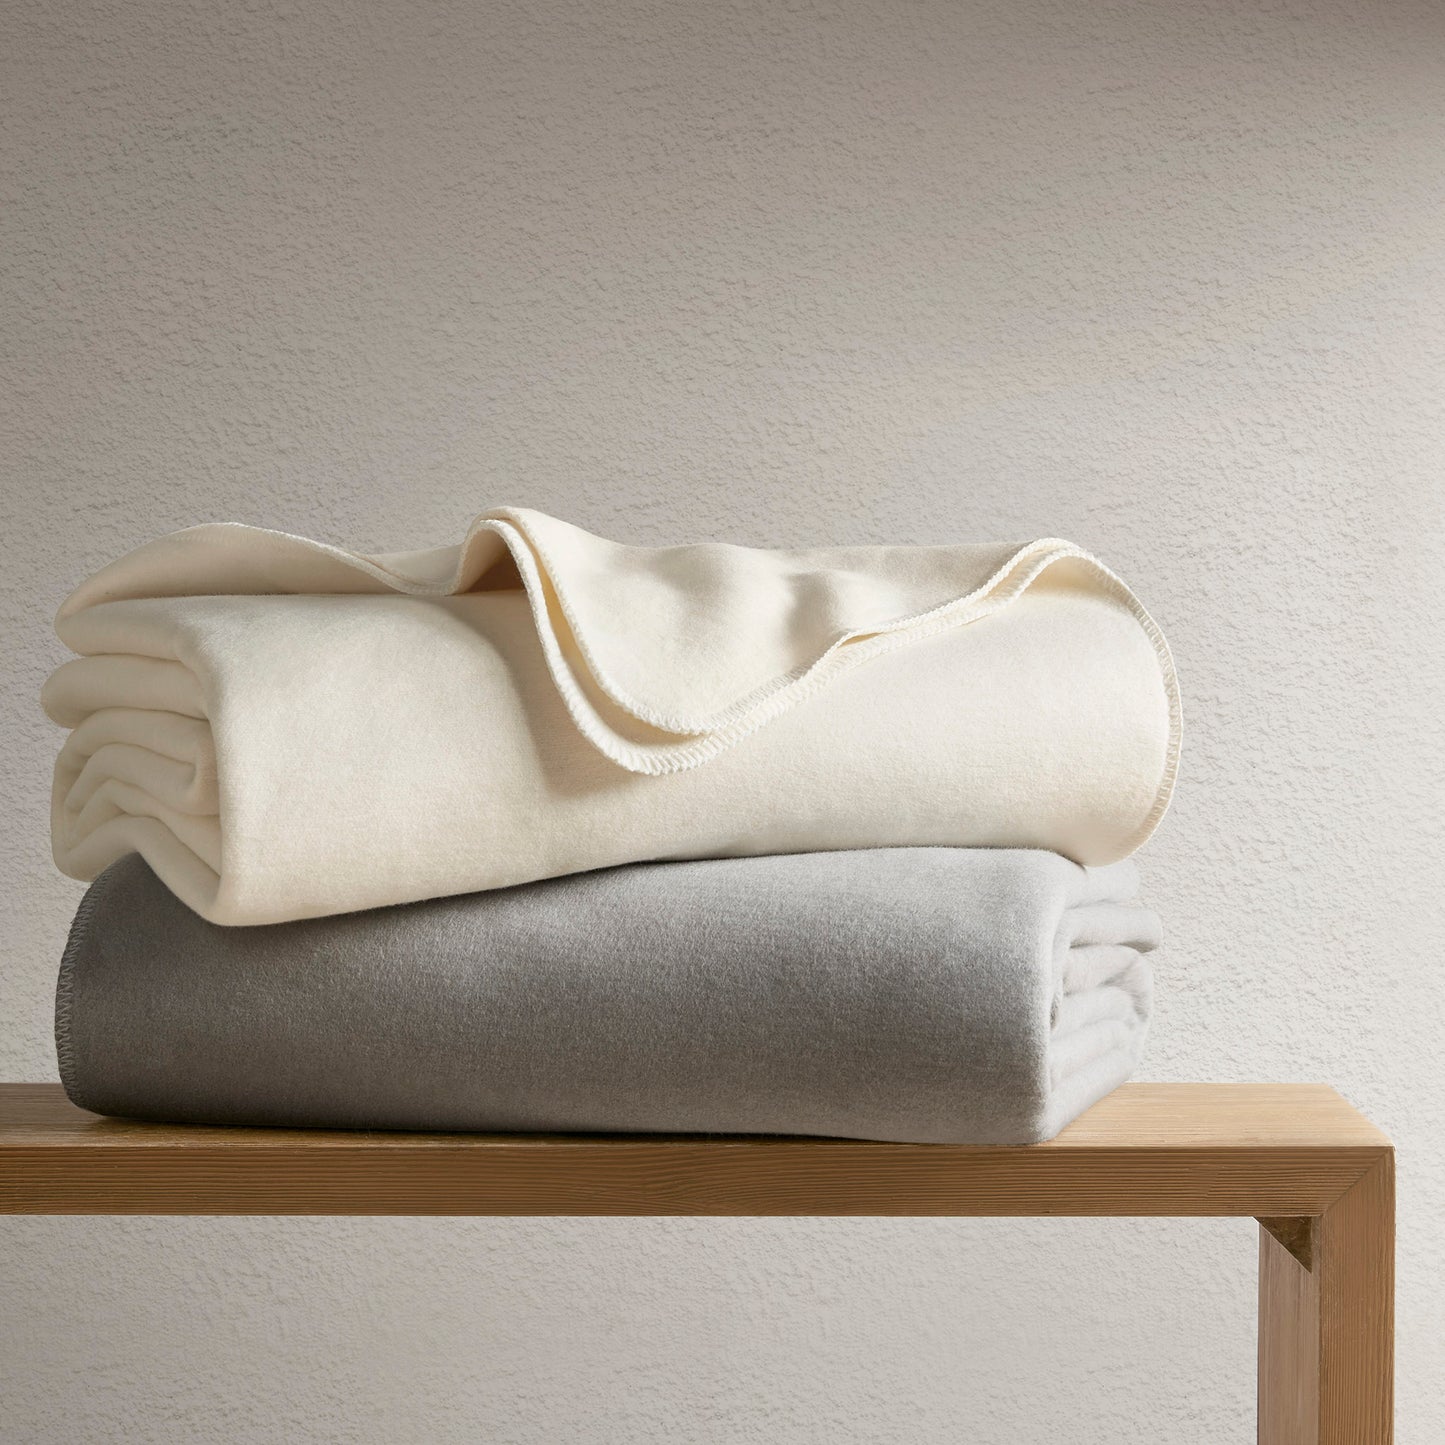 Croscil Solid Cotton Blanket